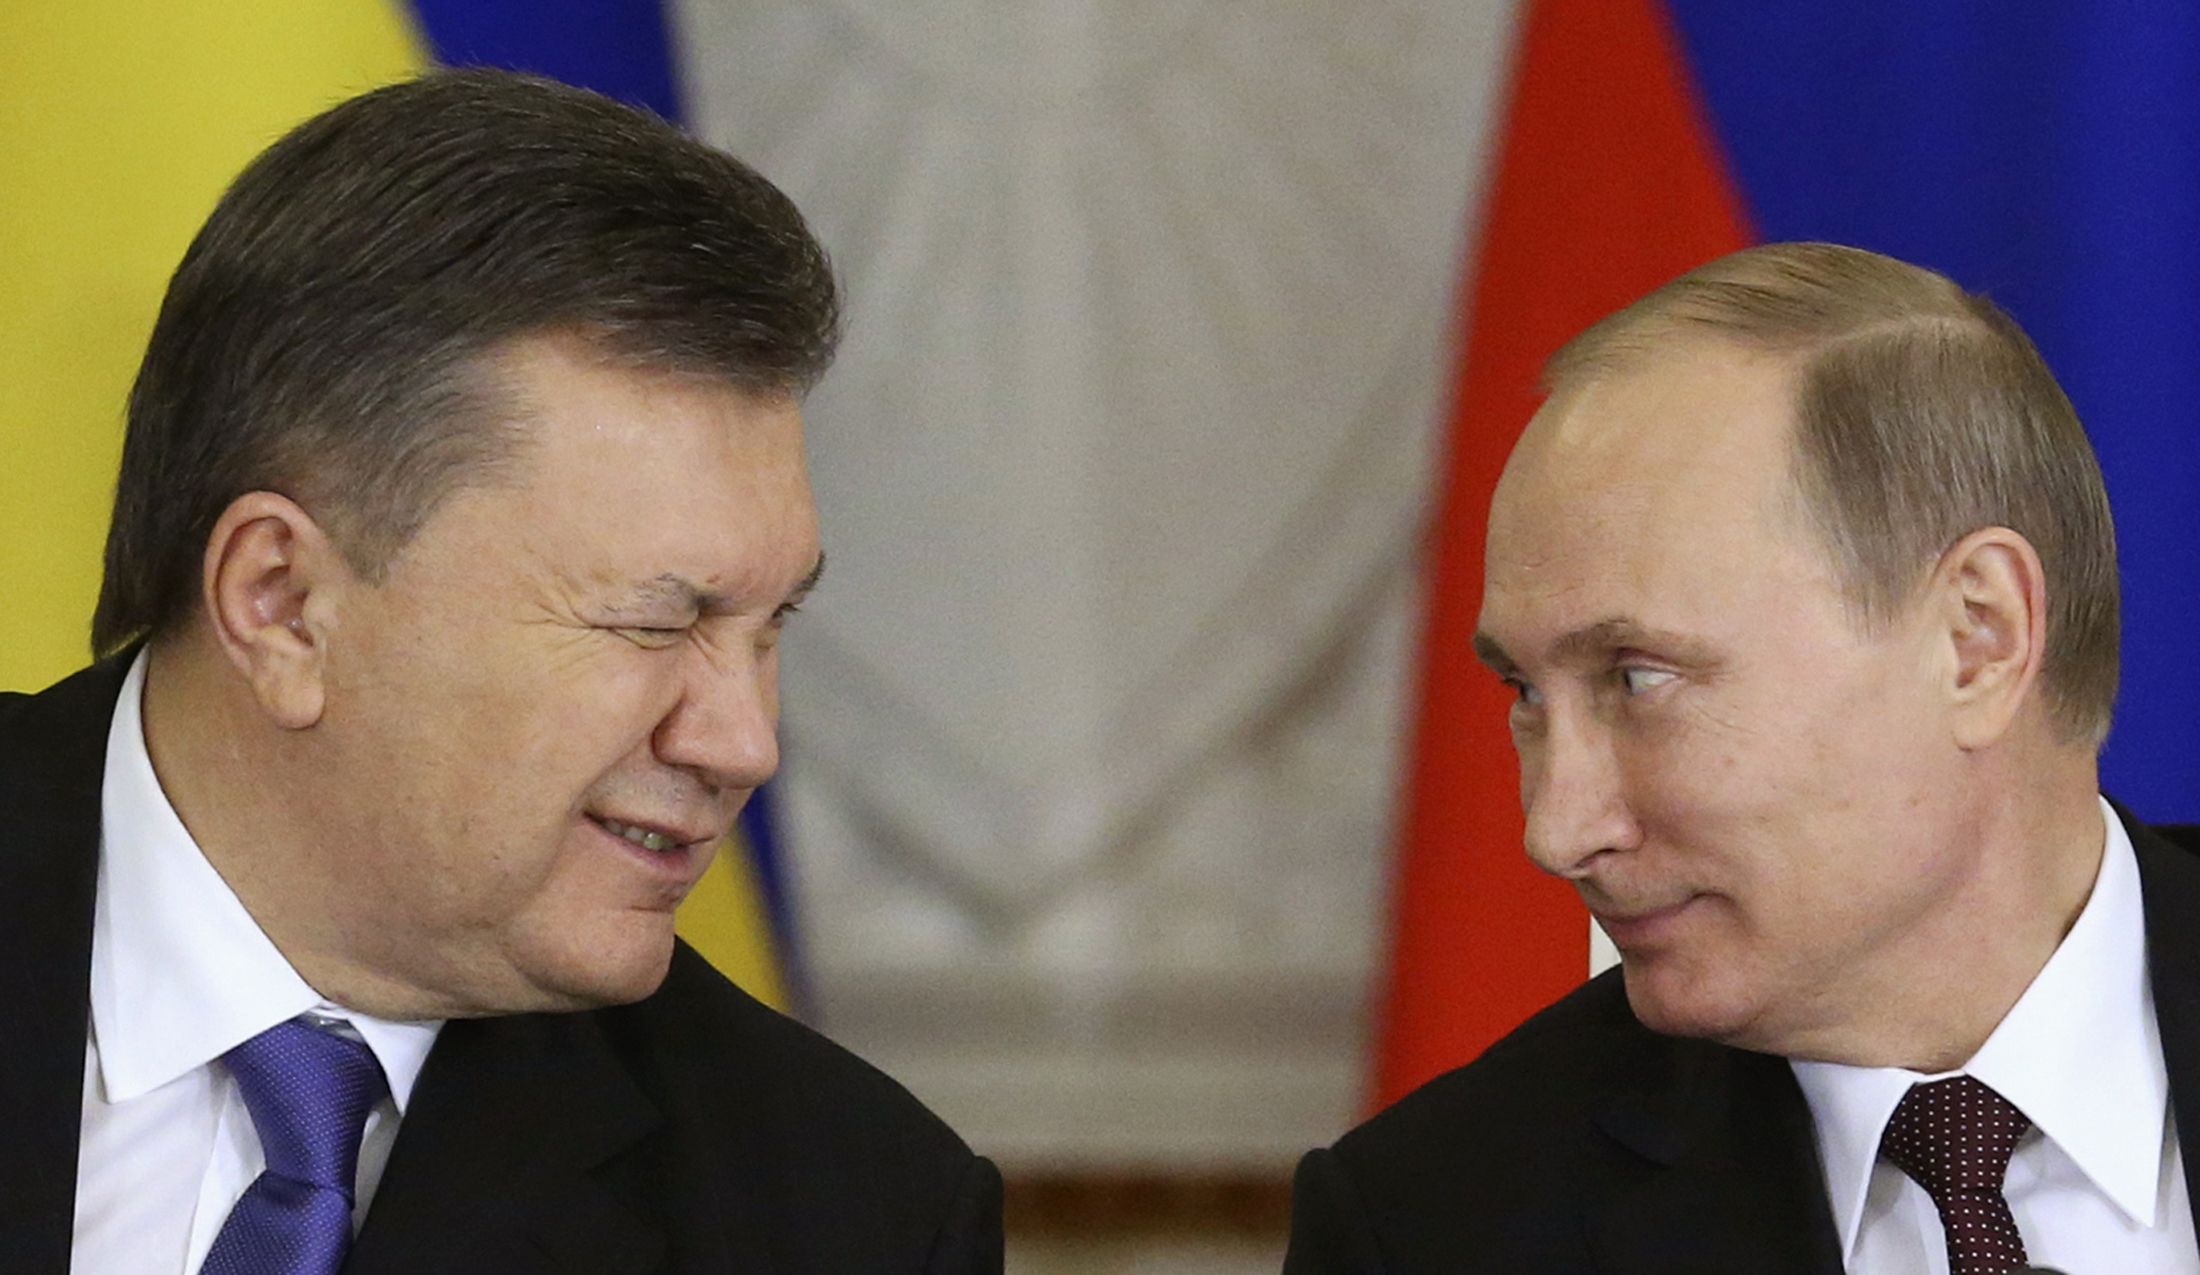 Yanukovych winks at Putin